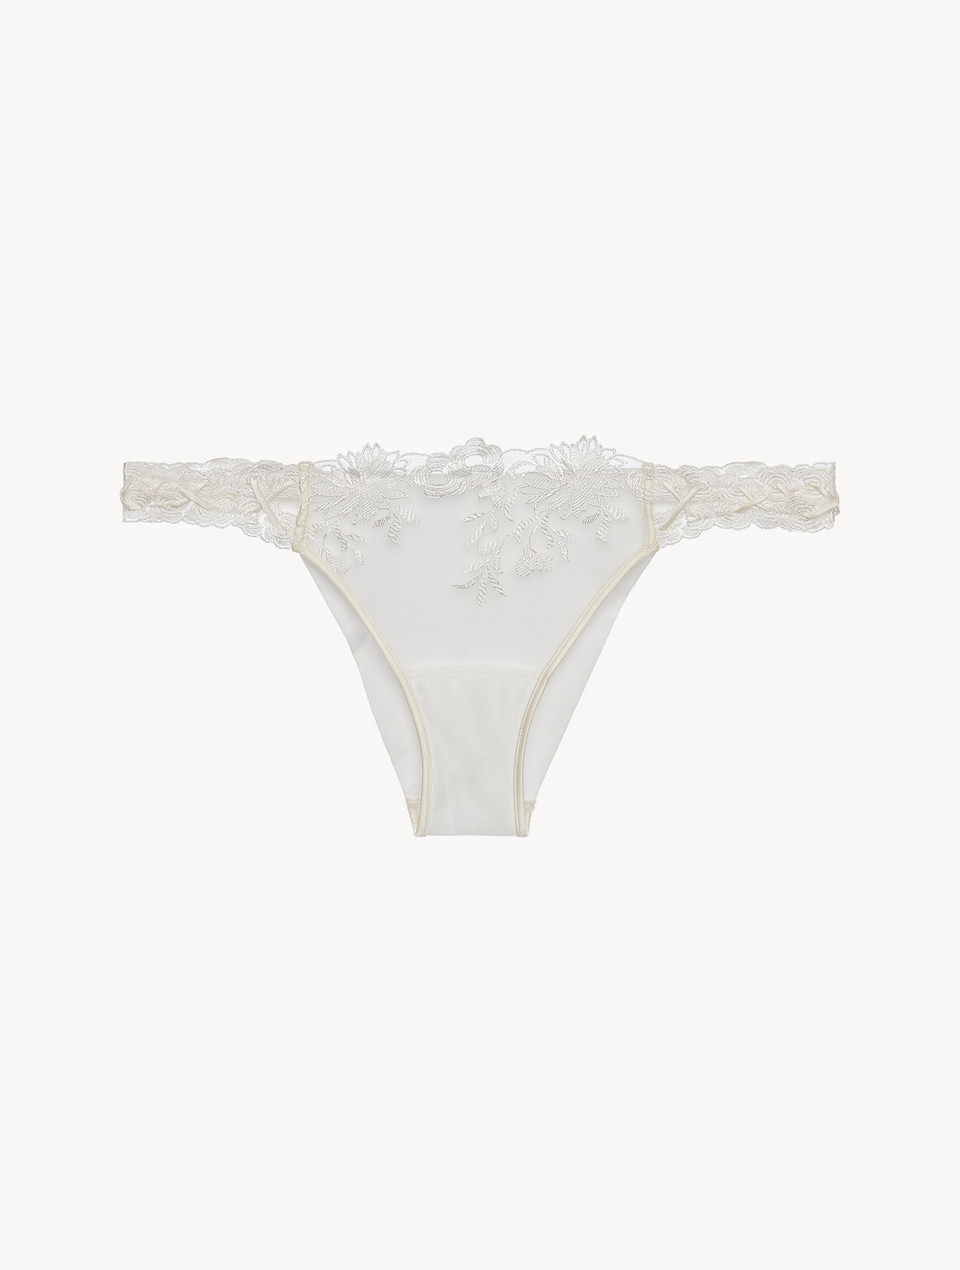 Luxury Off-White Lycra Brazilian Panties with Tulle | La Perla